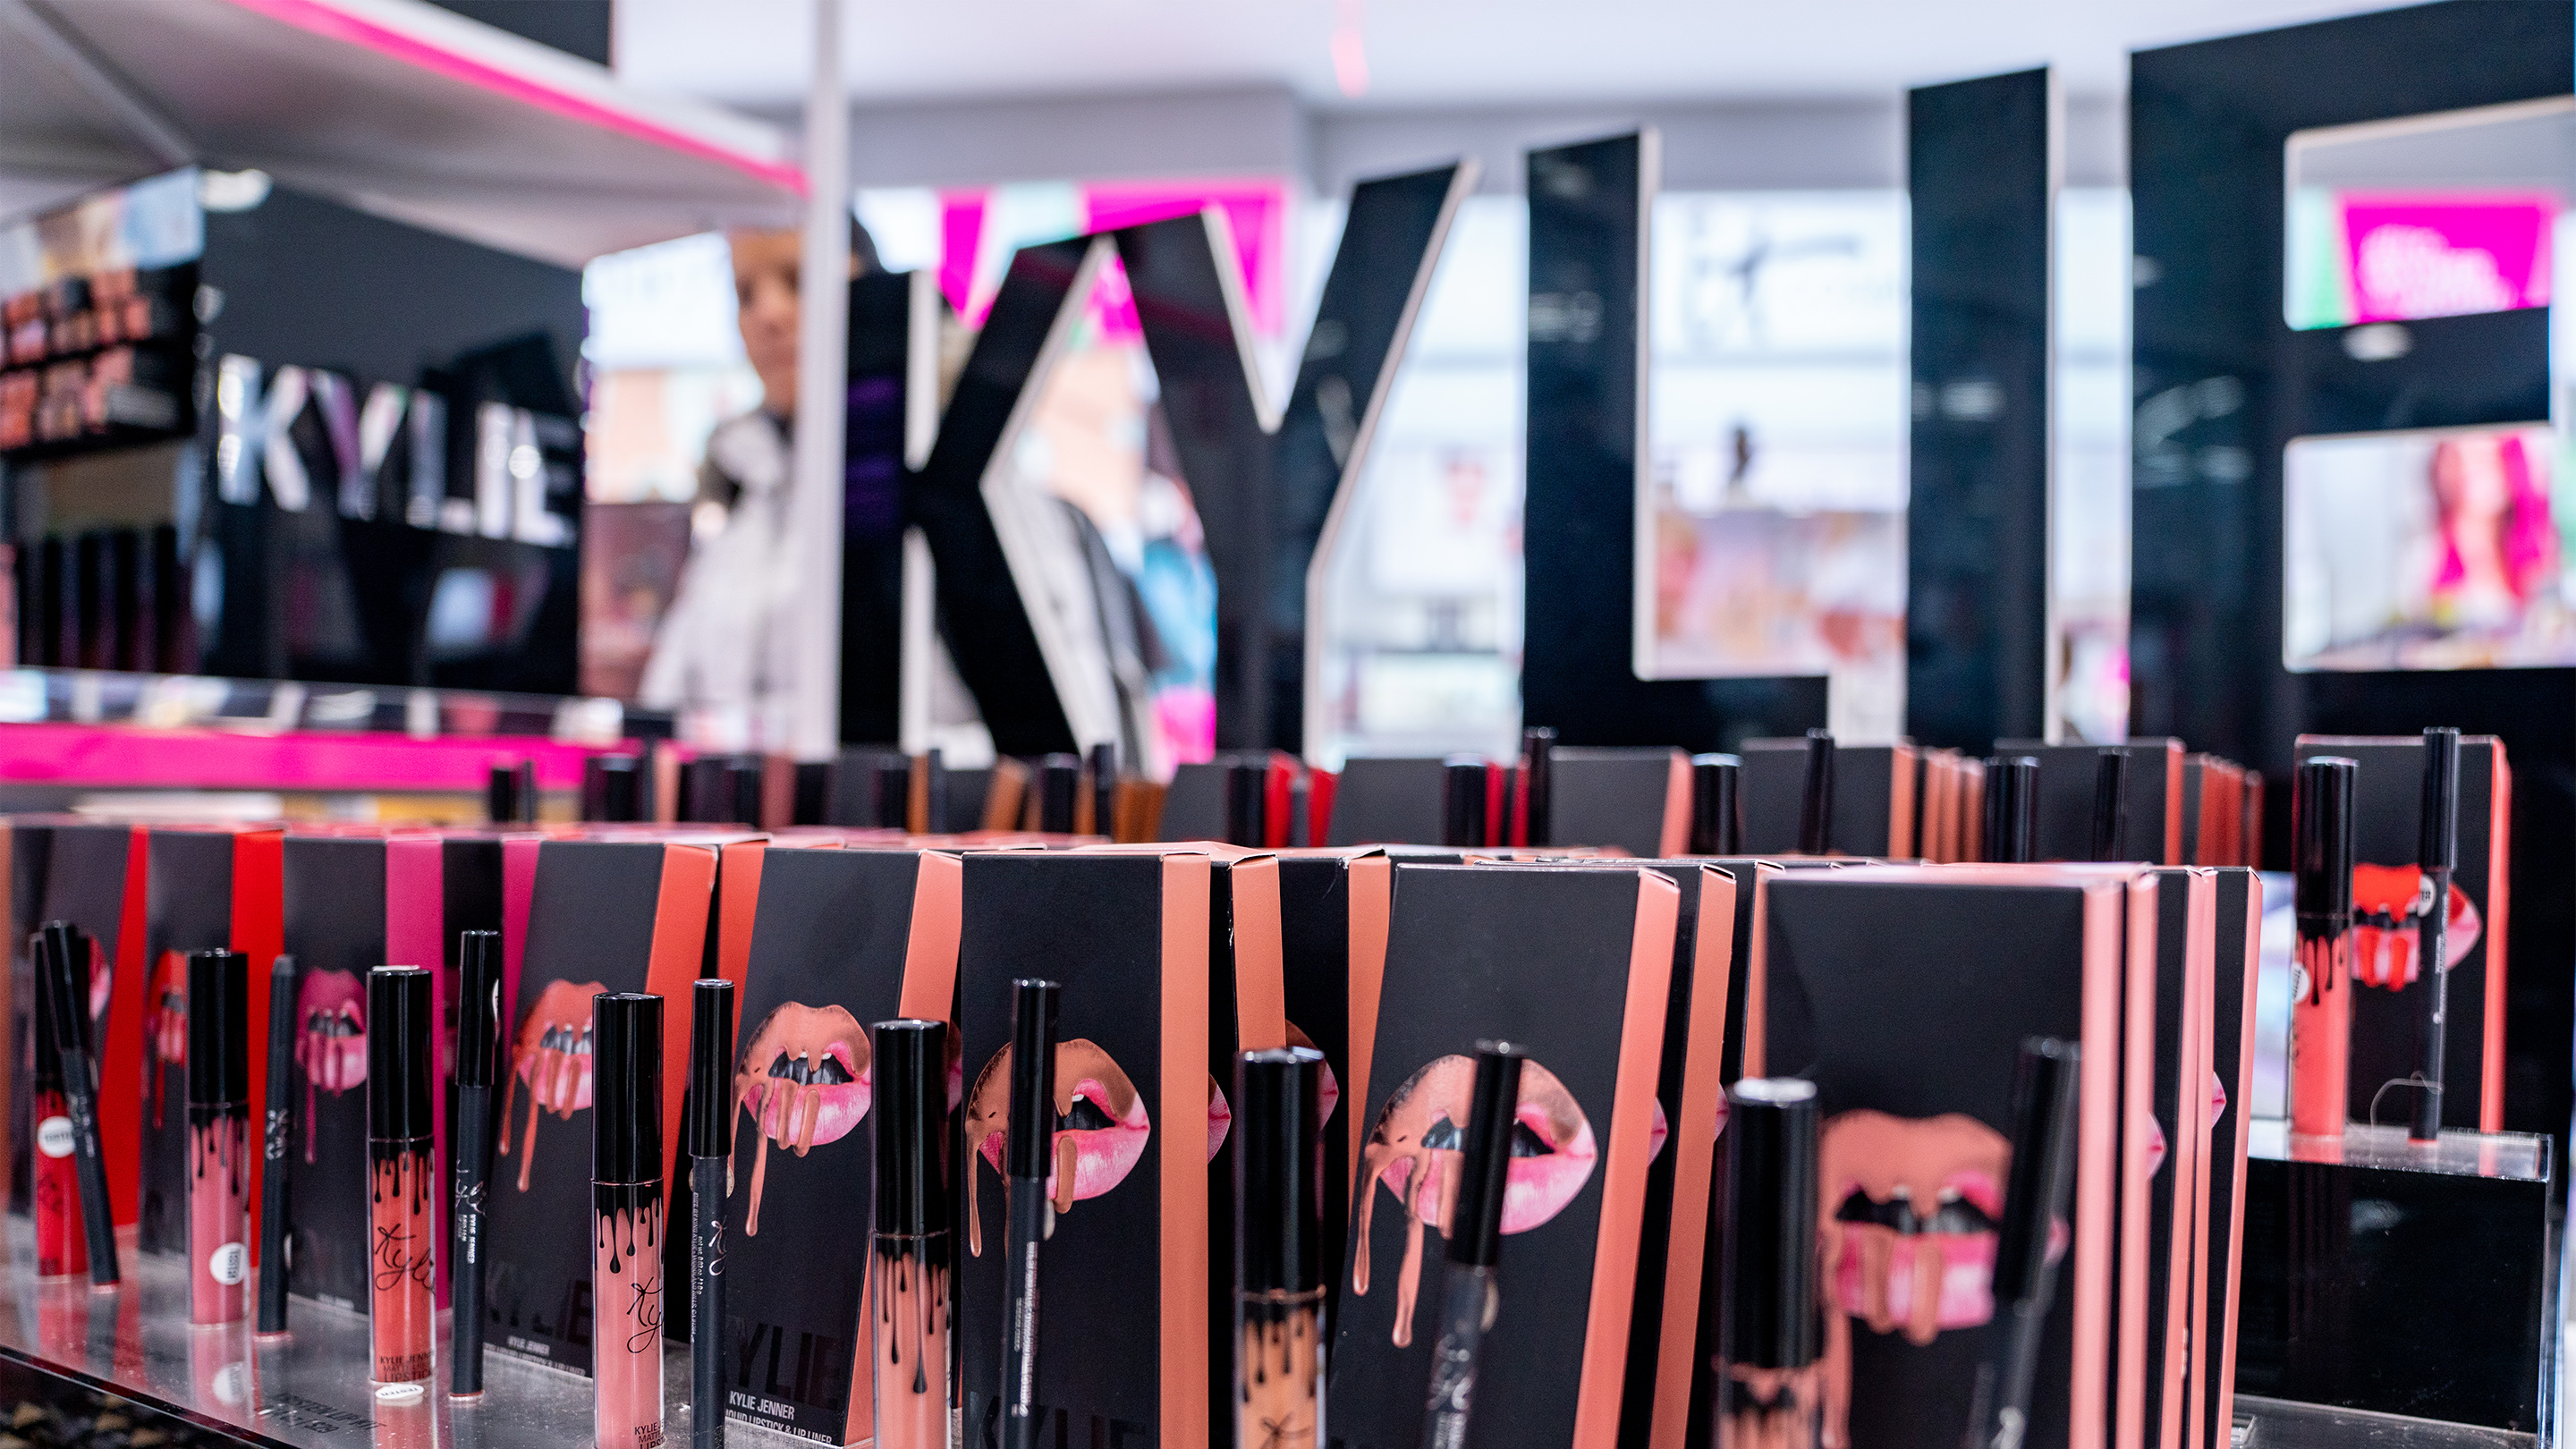 Kylie Jenner brings beauty brand to Ulta